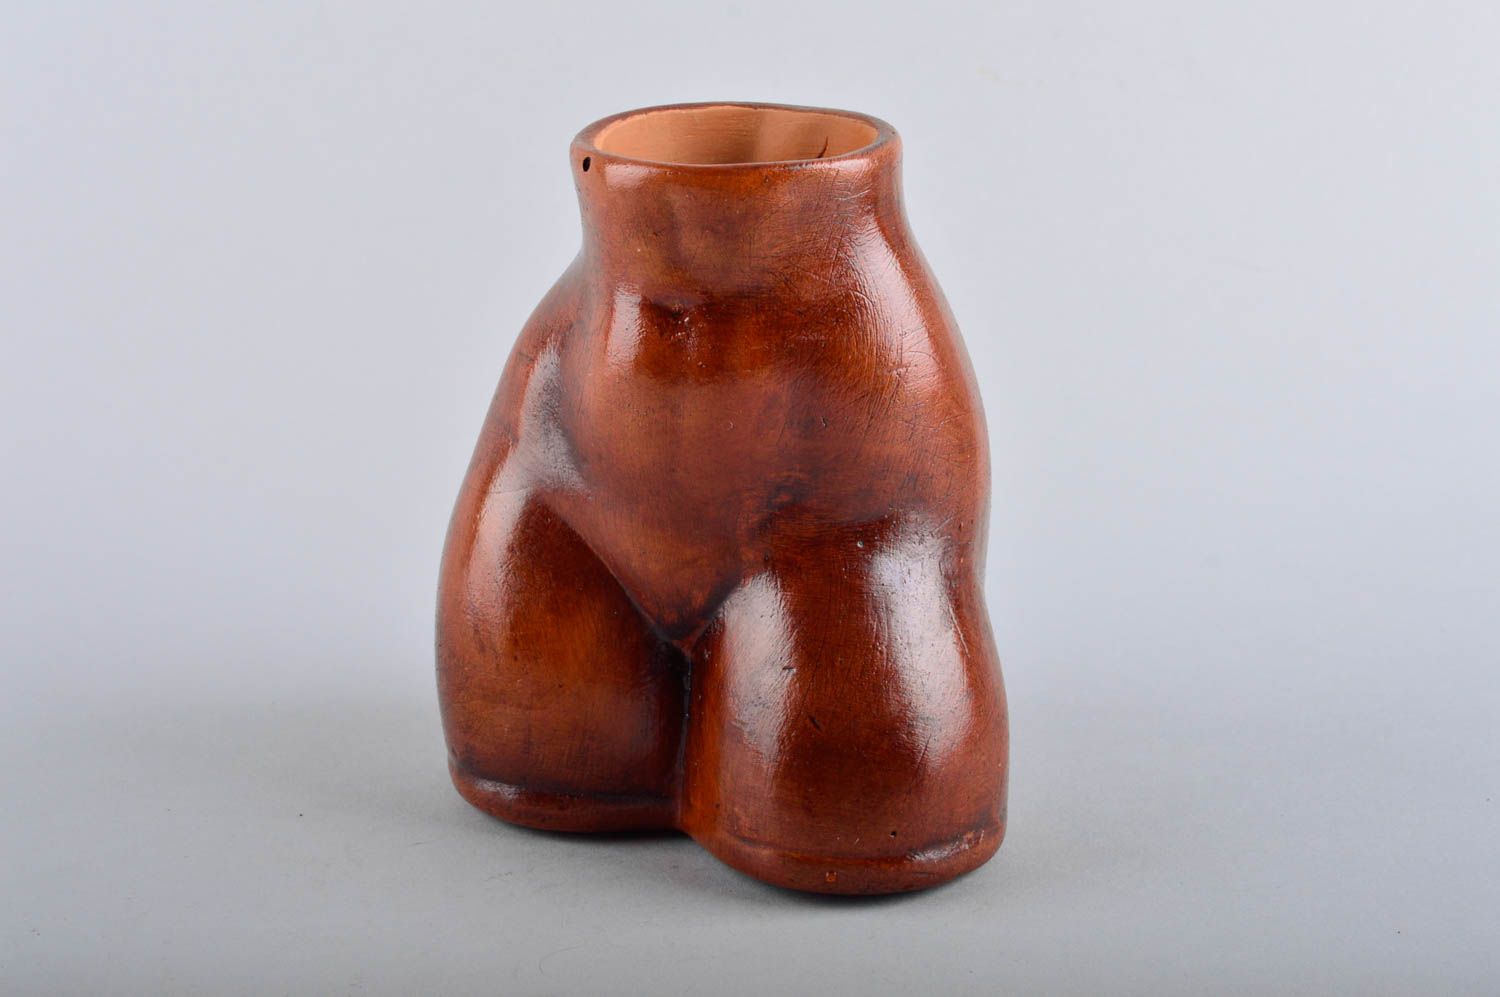 15 oz ceramic brown clay vase jug 4 inches tall 0,81 lb photo 2